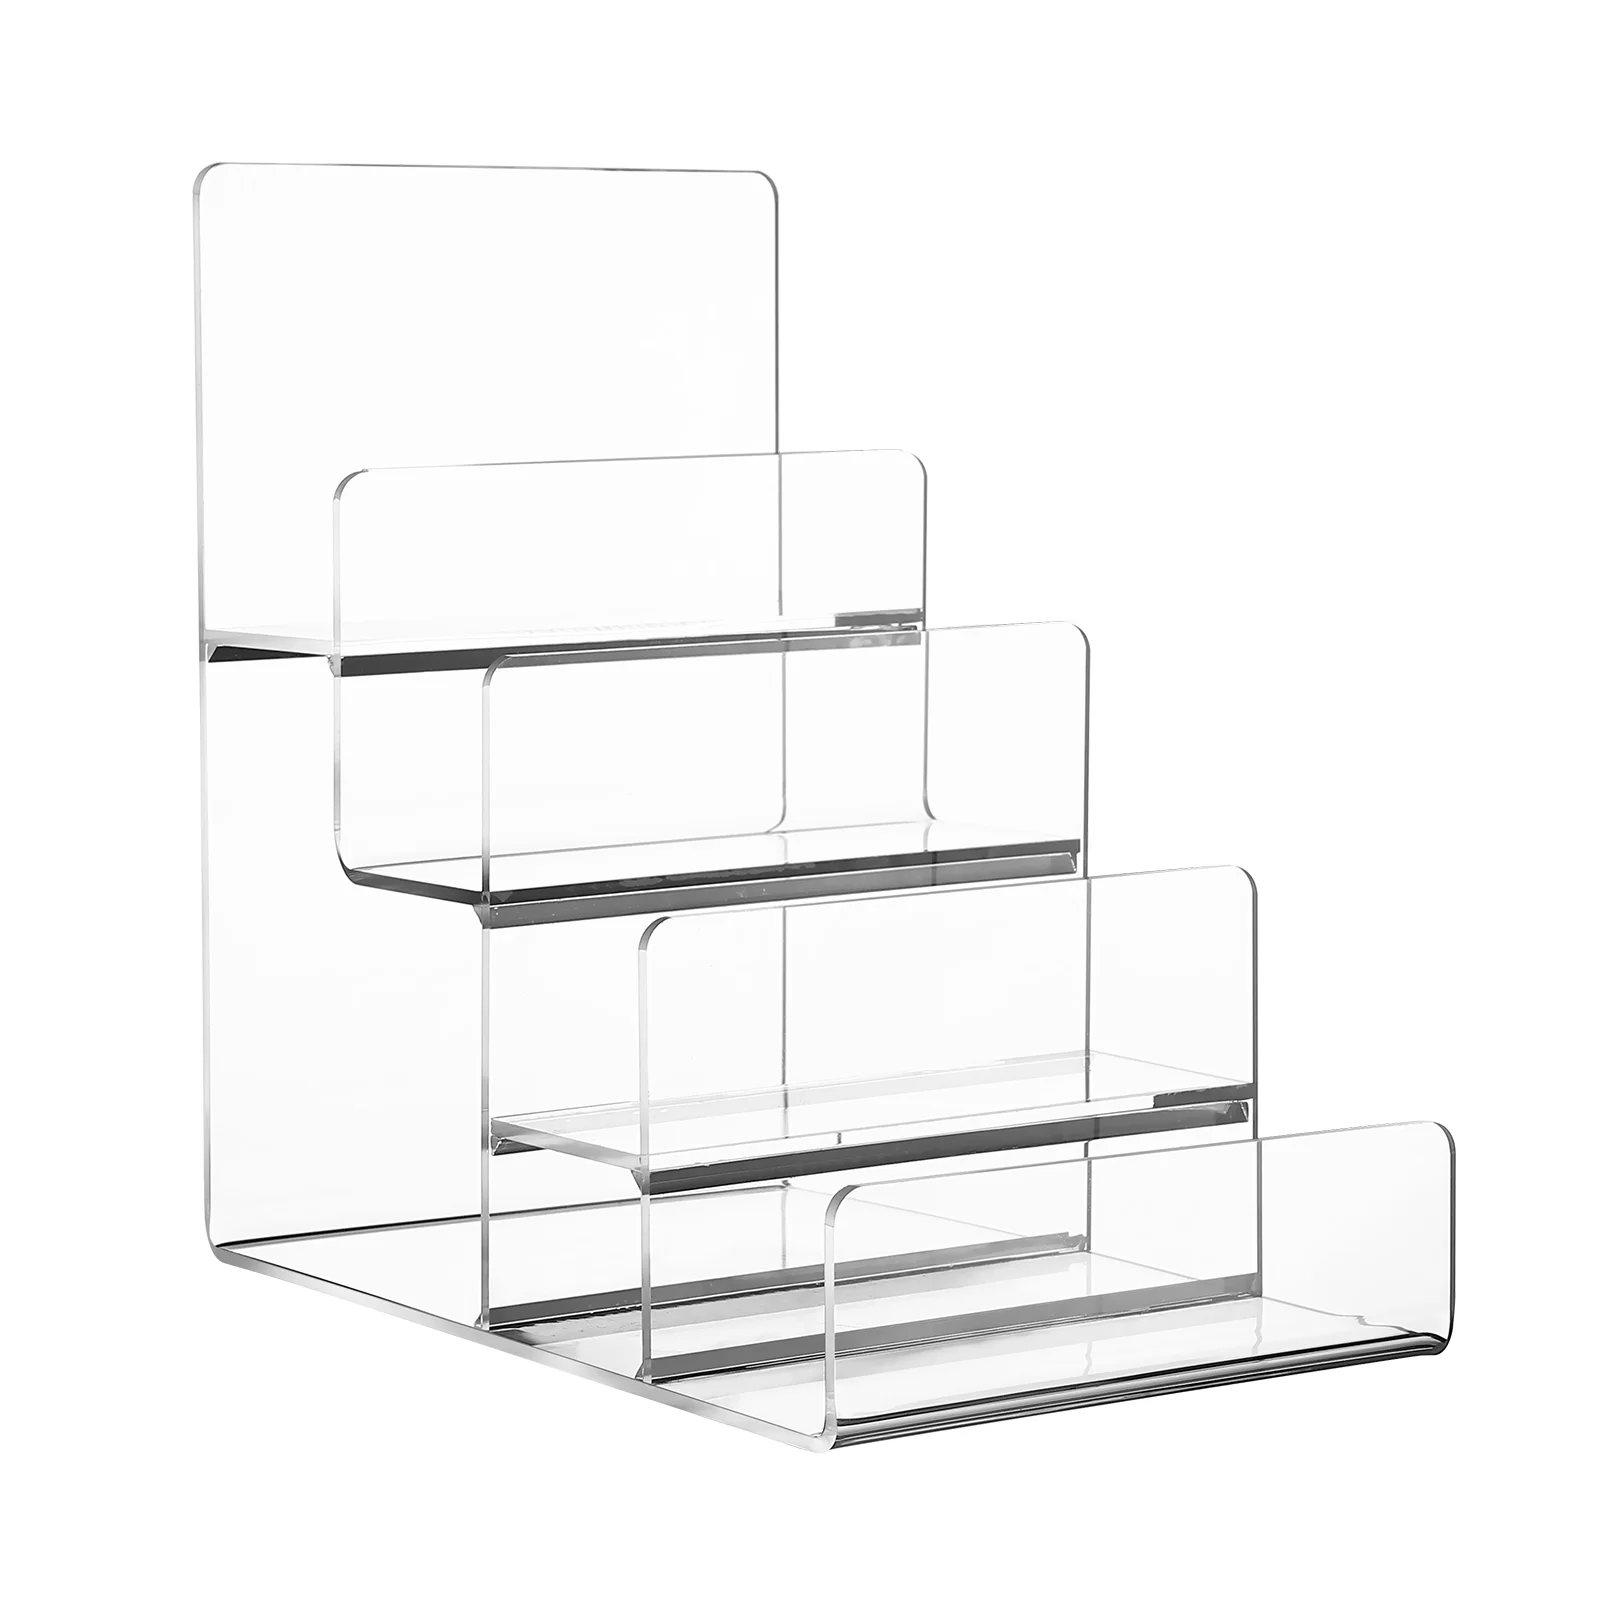 

Display Acrylic Stand Purse Risersholder Organizer Wallet Shelf Clear Riser Rack Stands Storage Sunglasses Tier Table Shelvespop